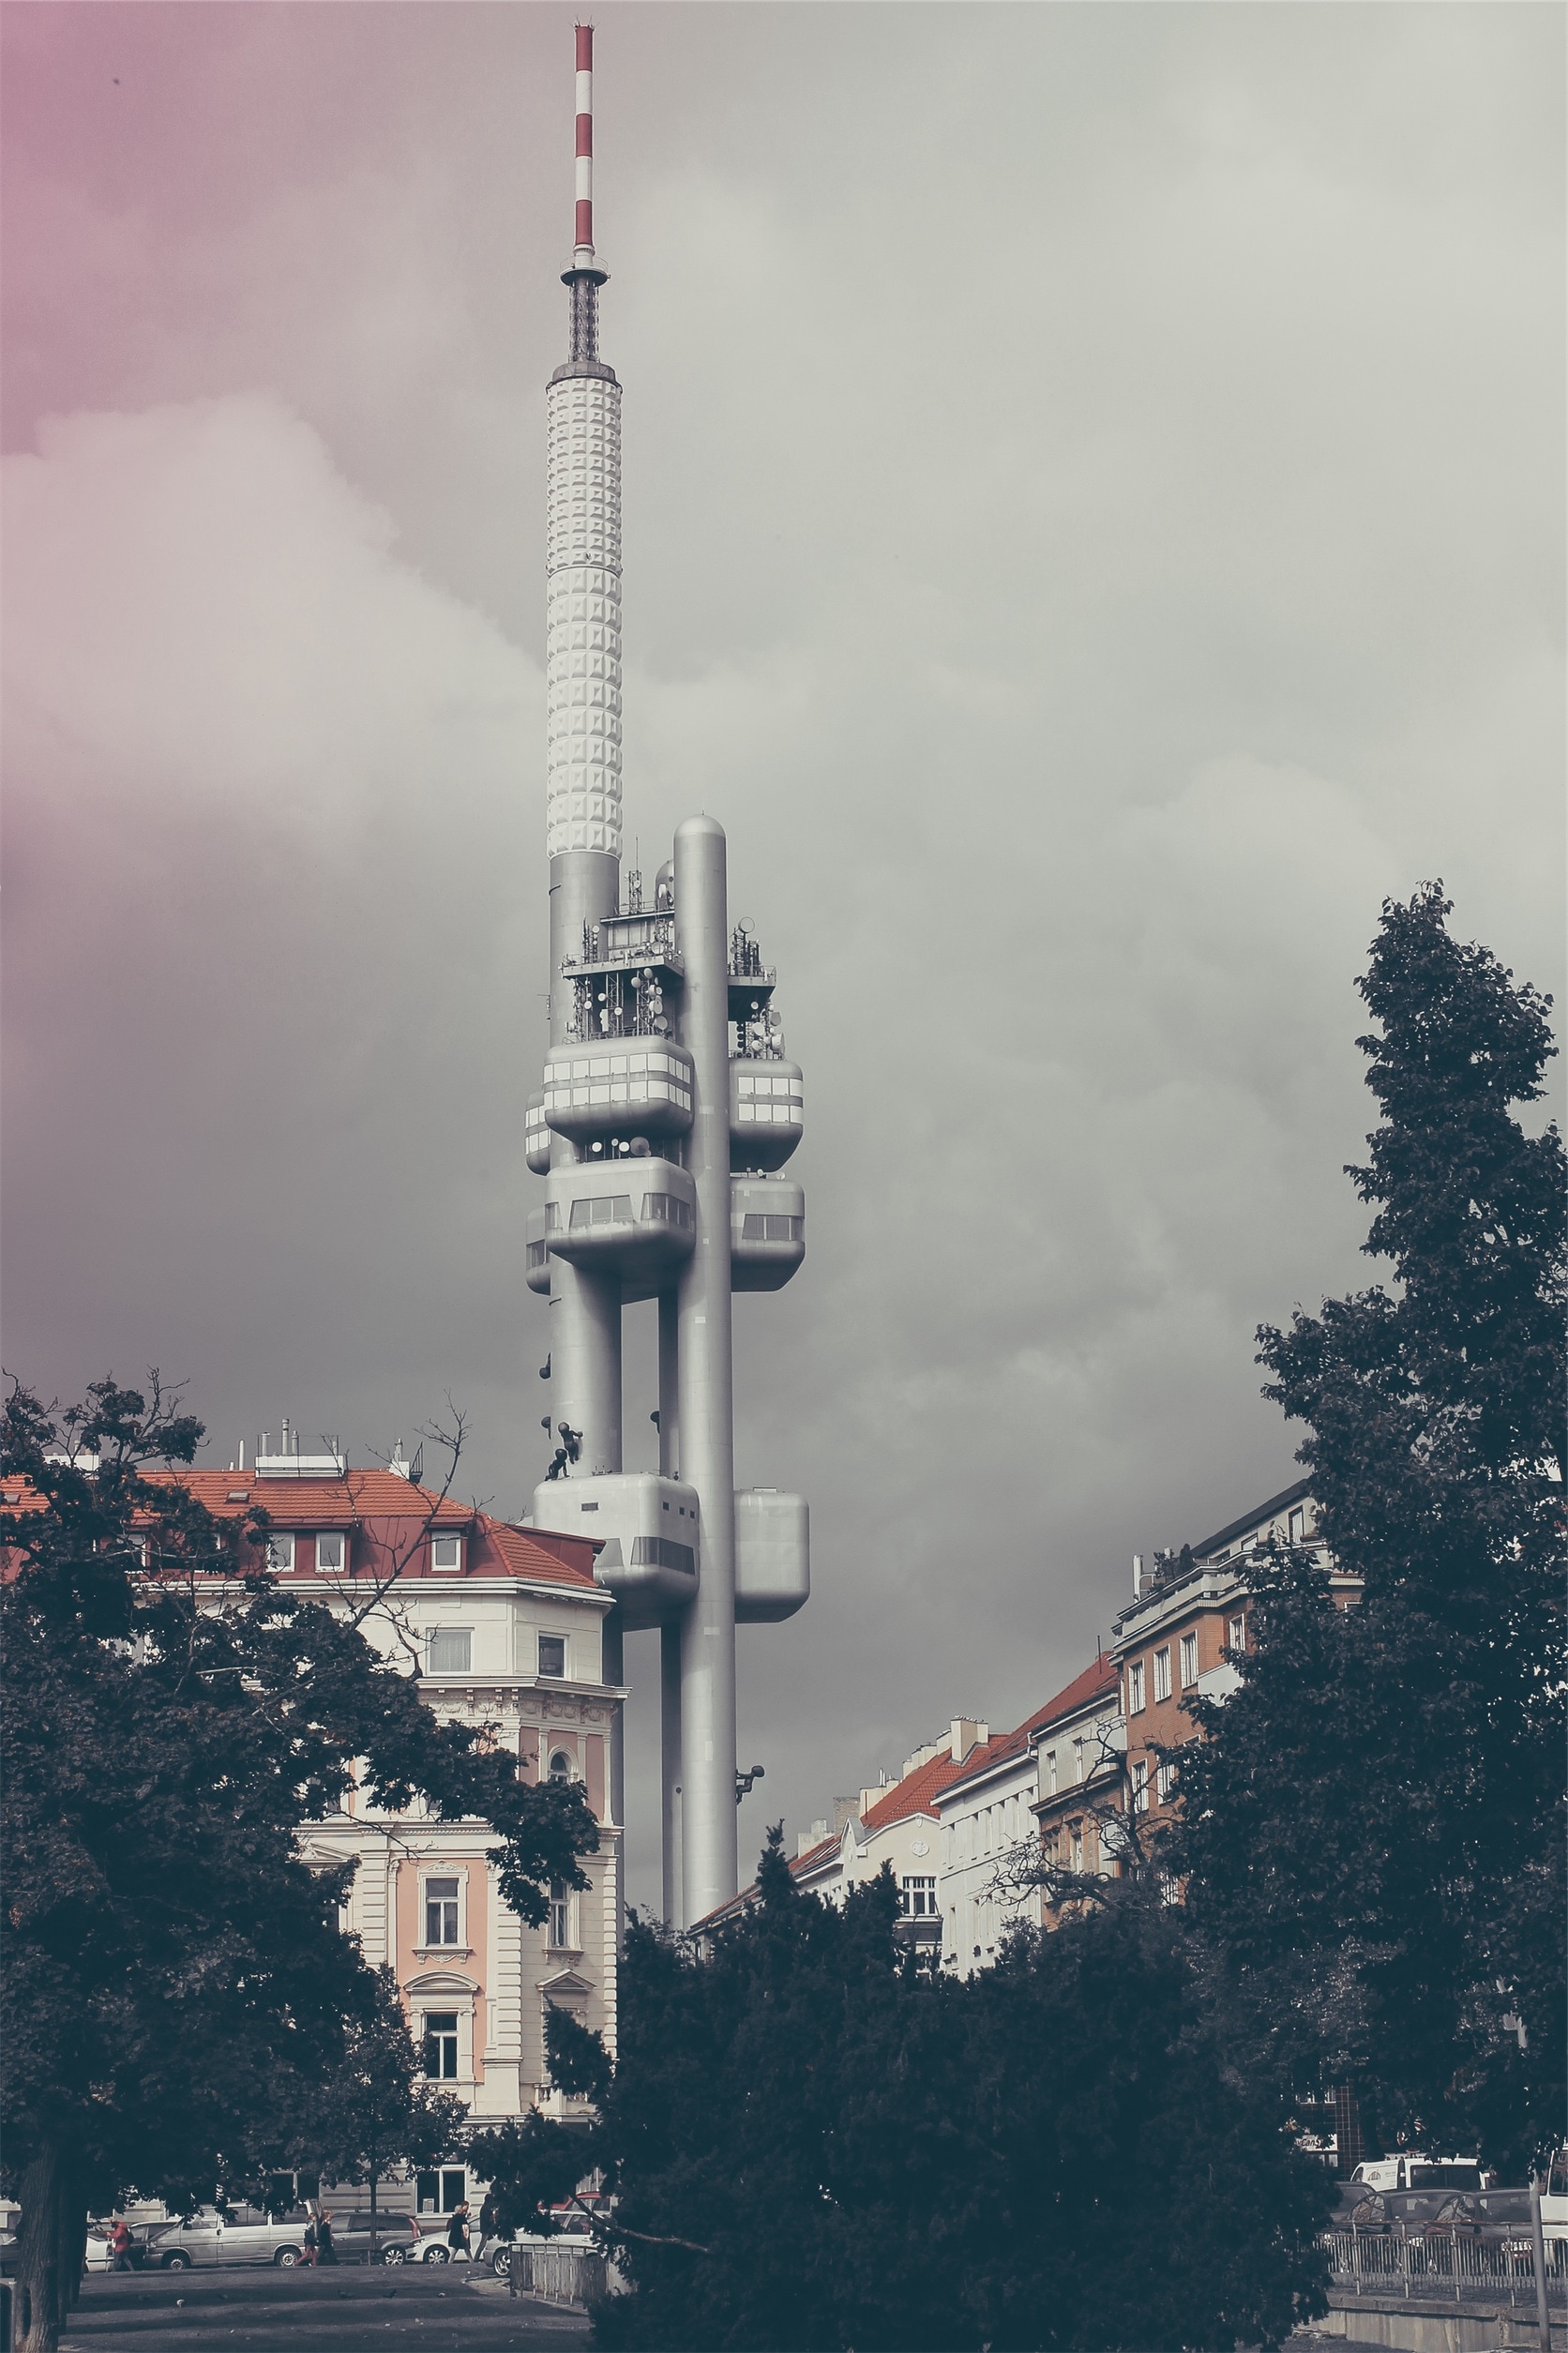 grey and white tall tower landmark